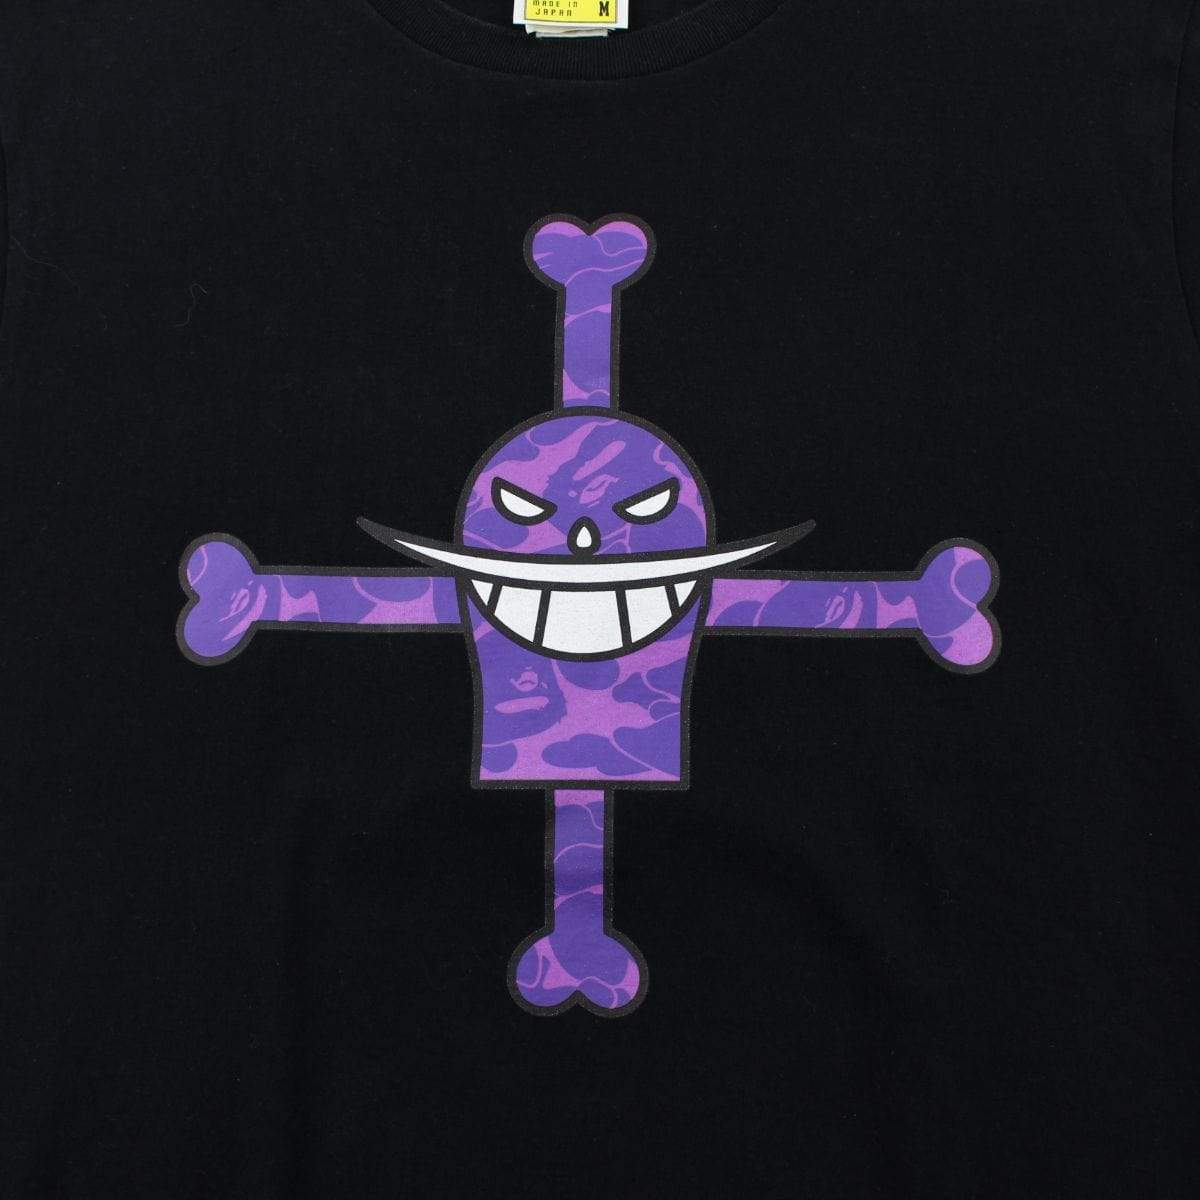 Bape x One Piece Purple Camo CrossBones Tee Black - SaruGeneral